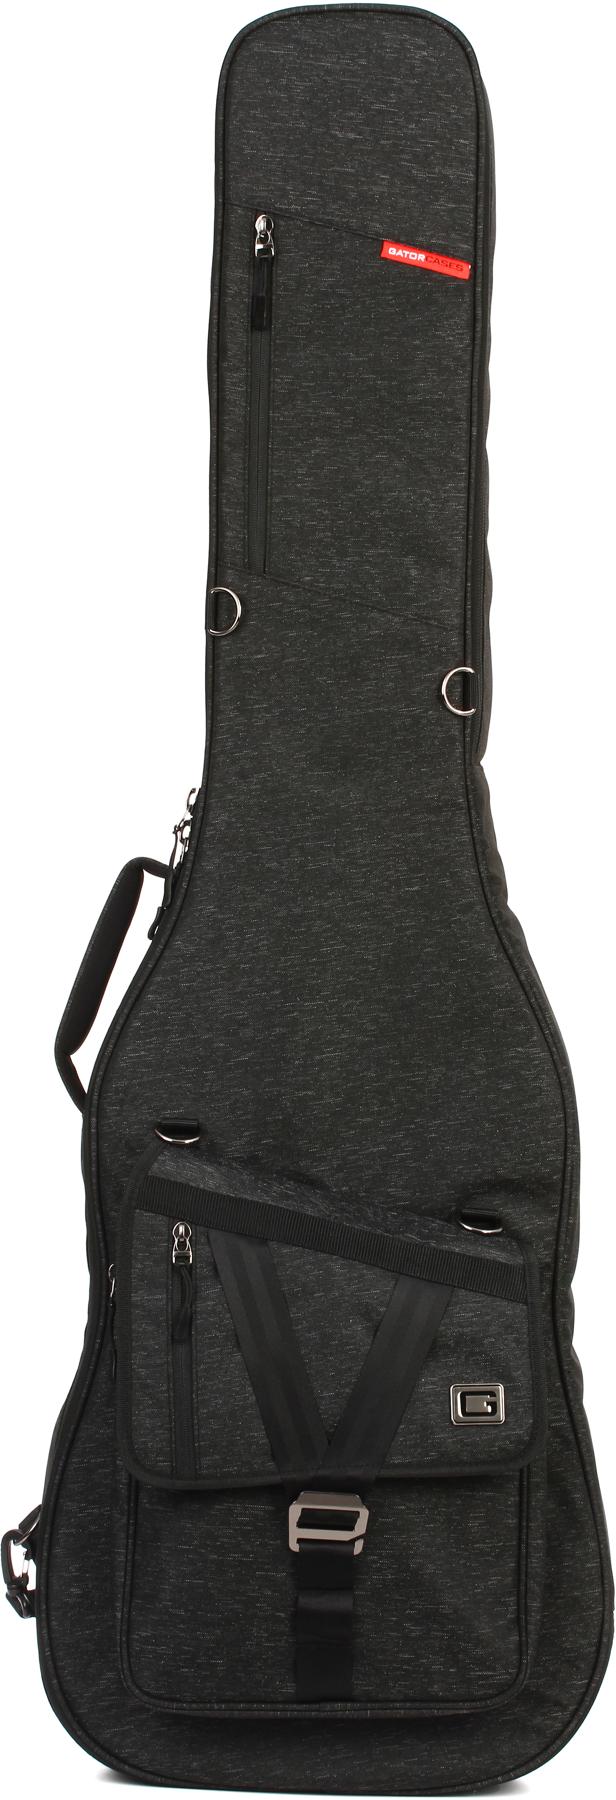 Amazon.com: Fender FB620 Electric Bass Gig Bag, Black : Musical Instruments